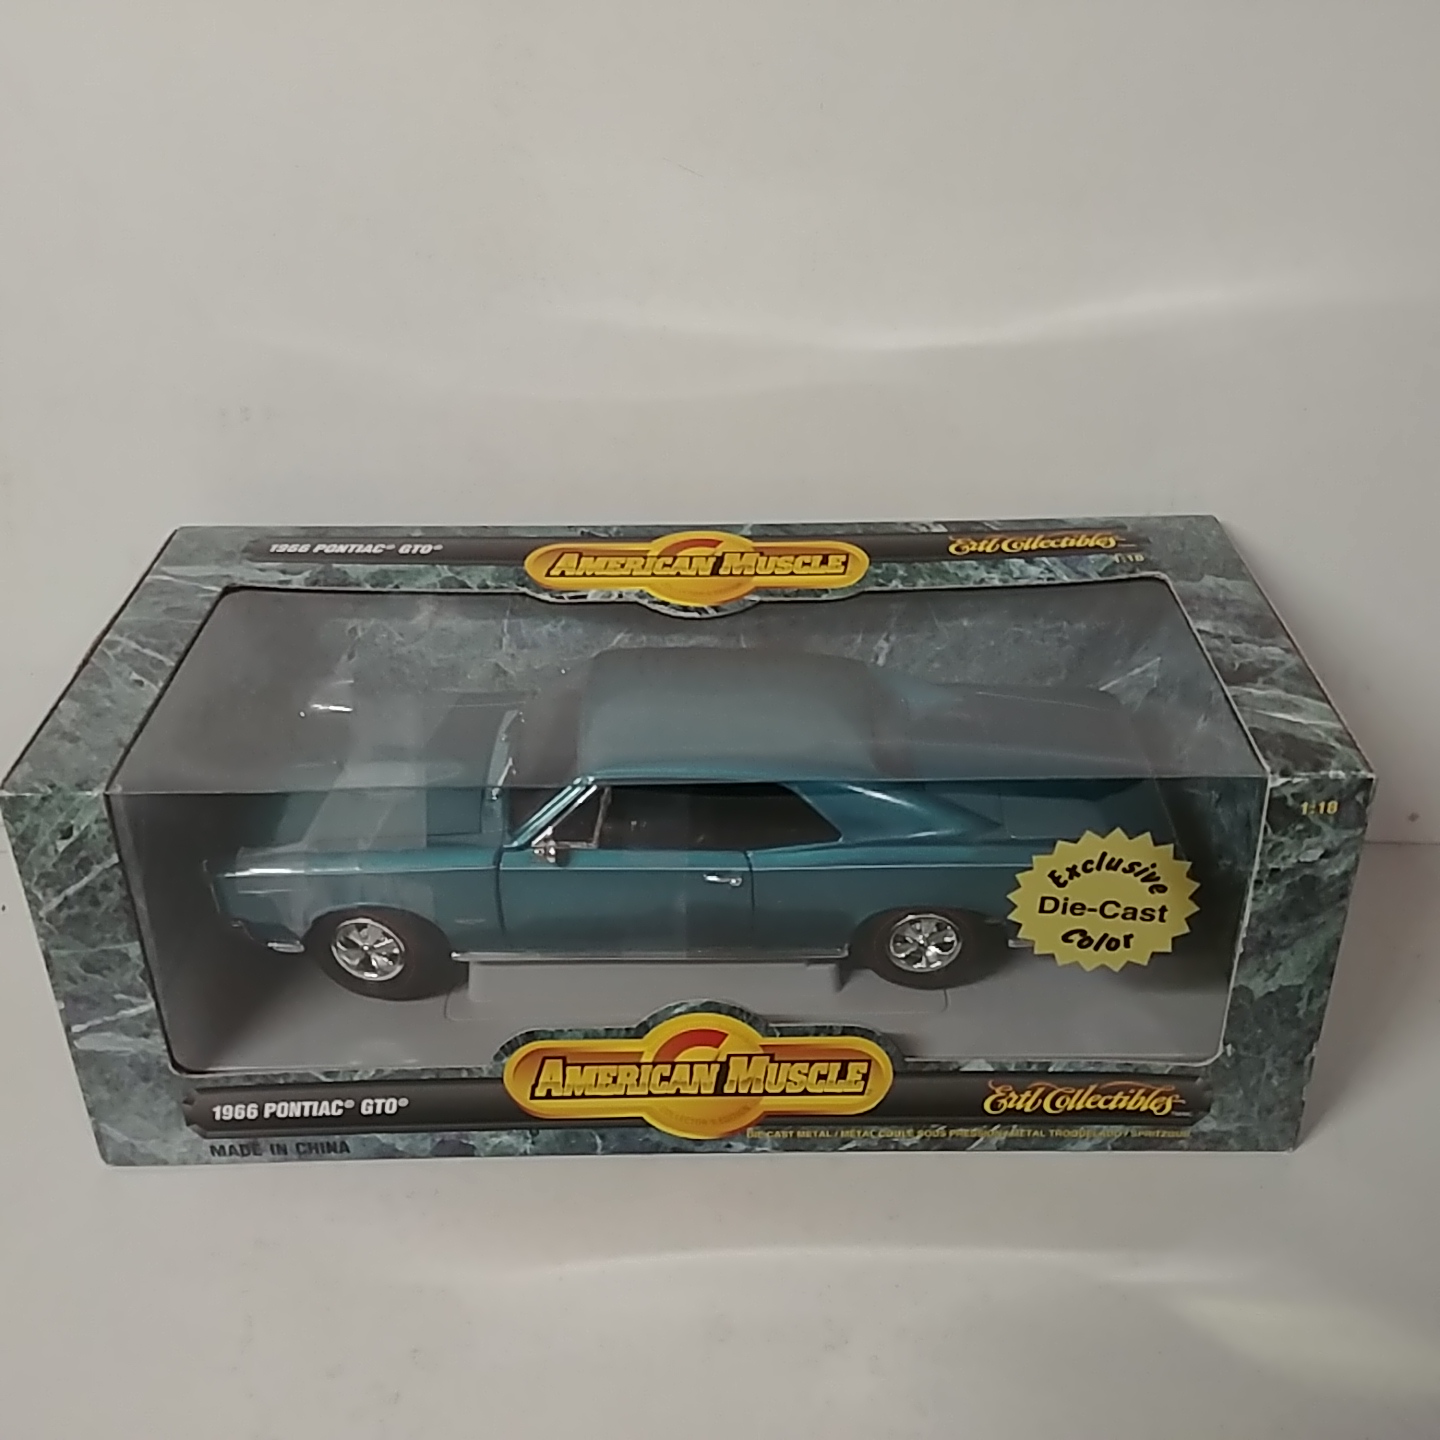 1966 Pontiac 1/18th GTO Blue